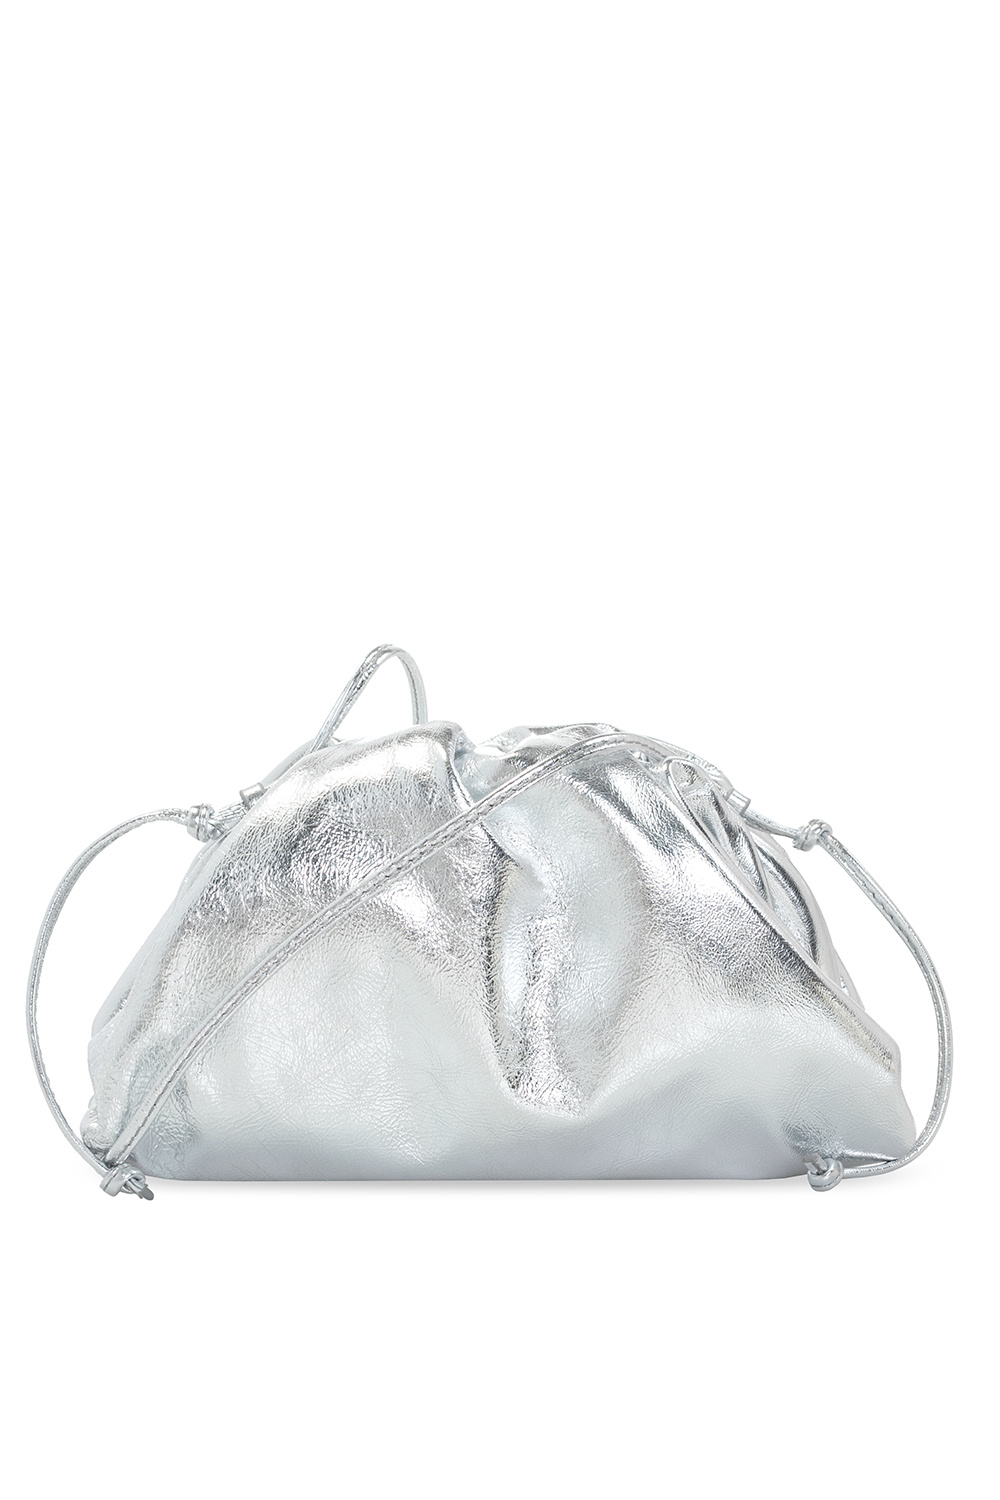 Bottega Veneta Mini Jodie Metallic Leather Top Handle Bag | Nordstrom